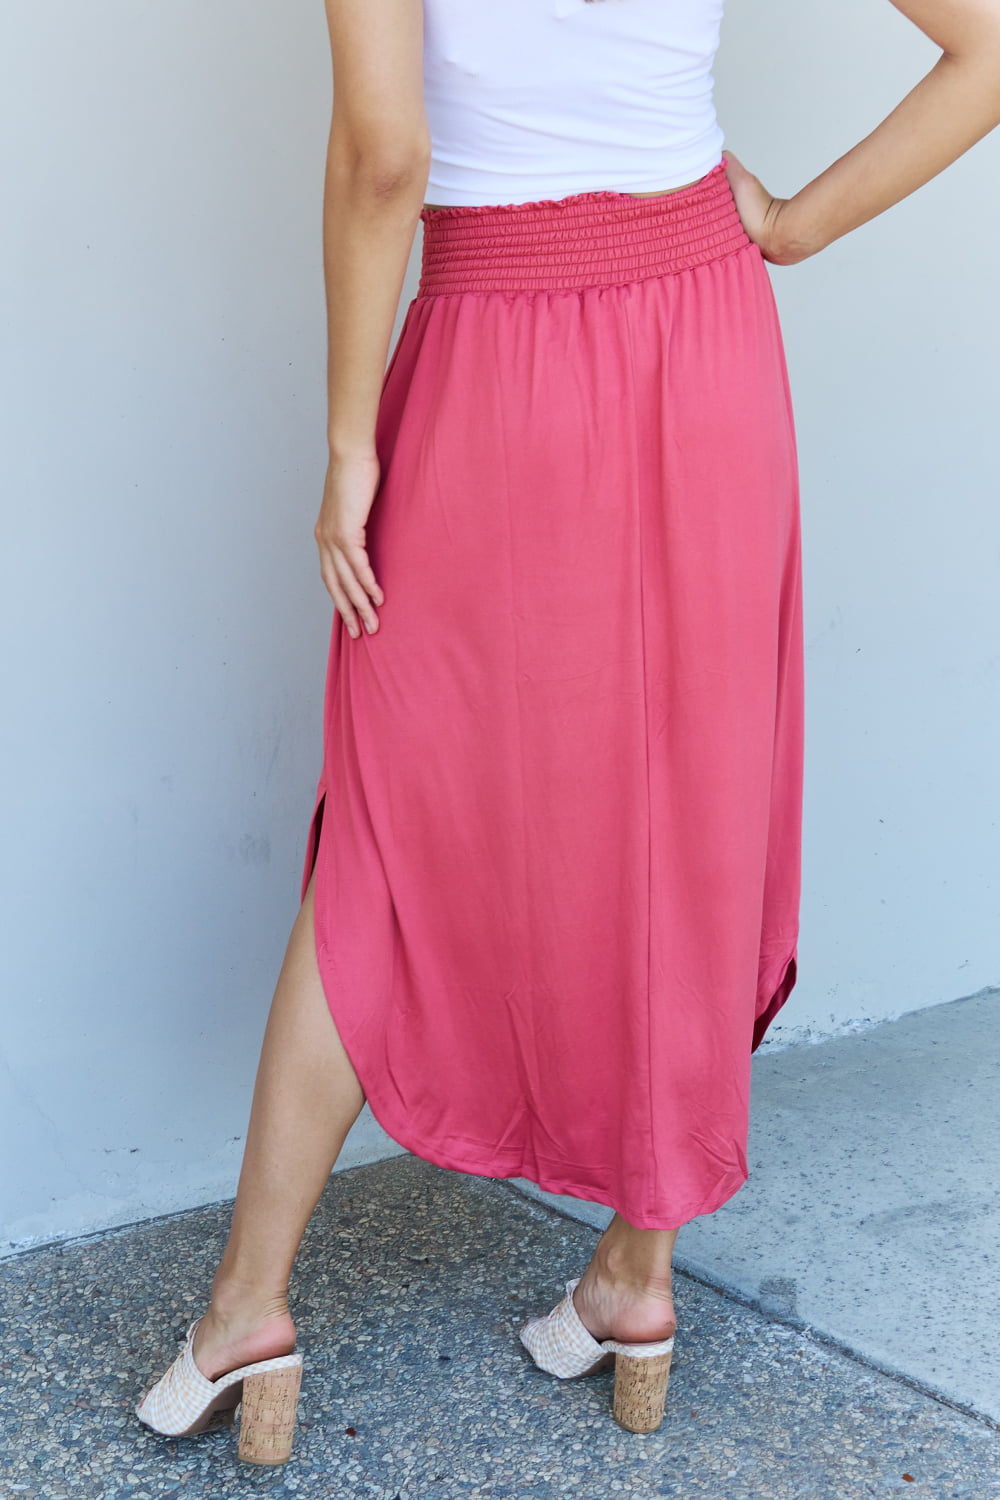 Doublju Comfort Princess Full Size High Waist Scoop Hem Maxi Skirt in Hot Pink - nailedmoms